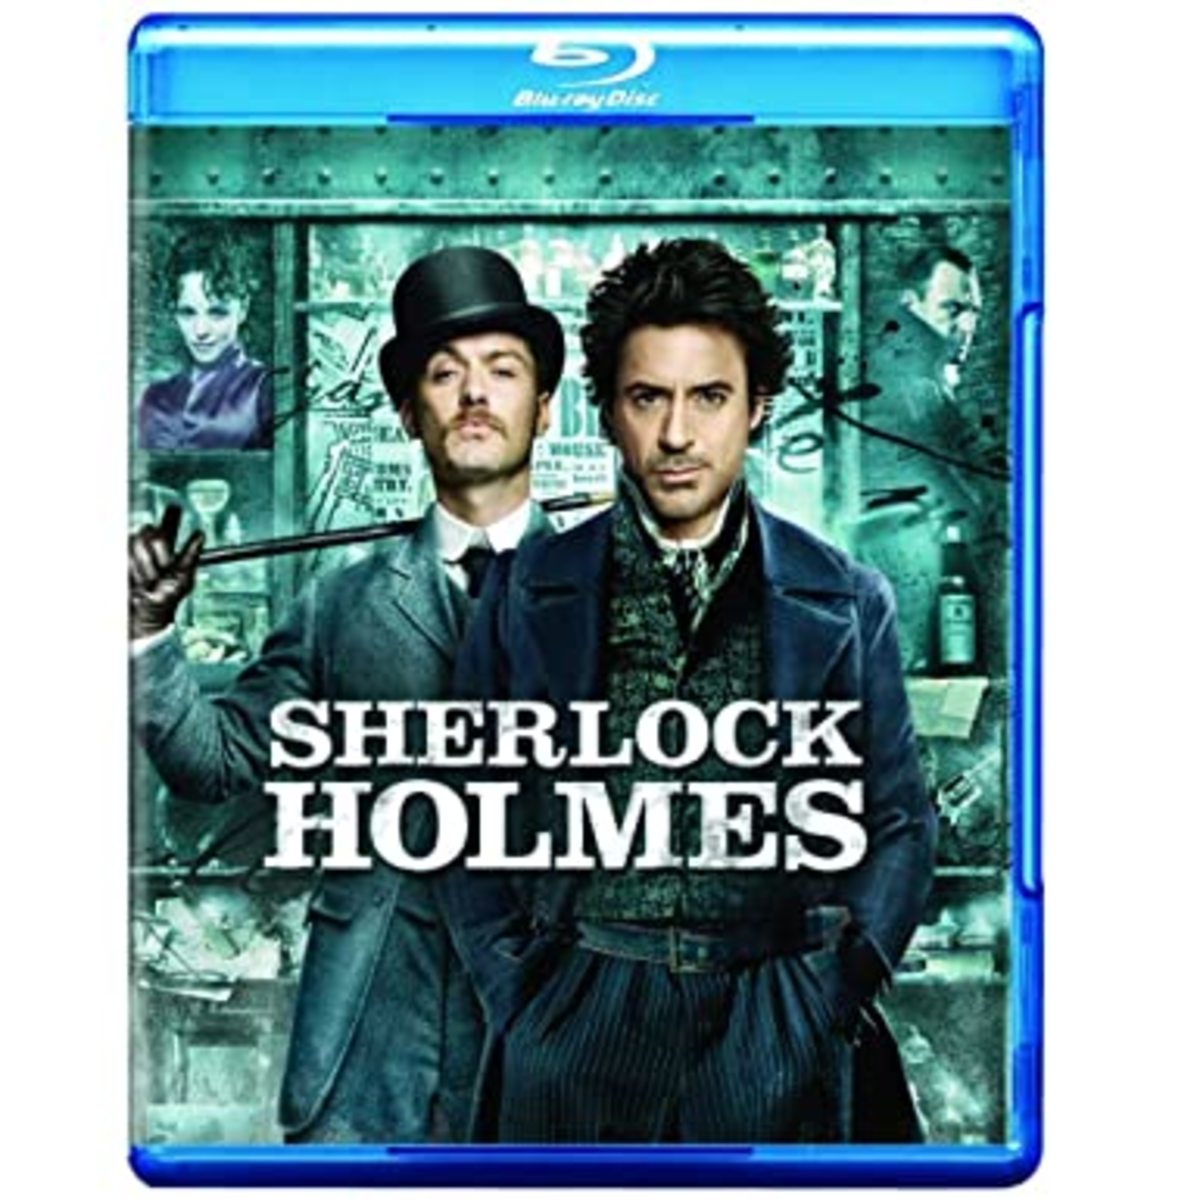 "Sherlock Holmes" (2009) blu-ray cover.